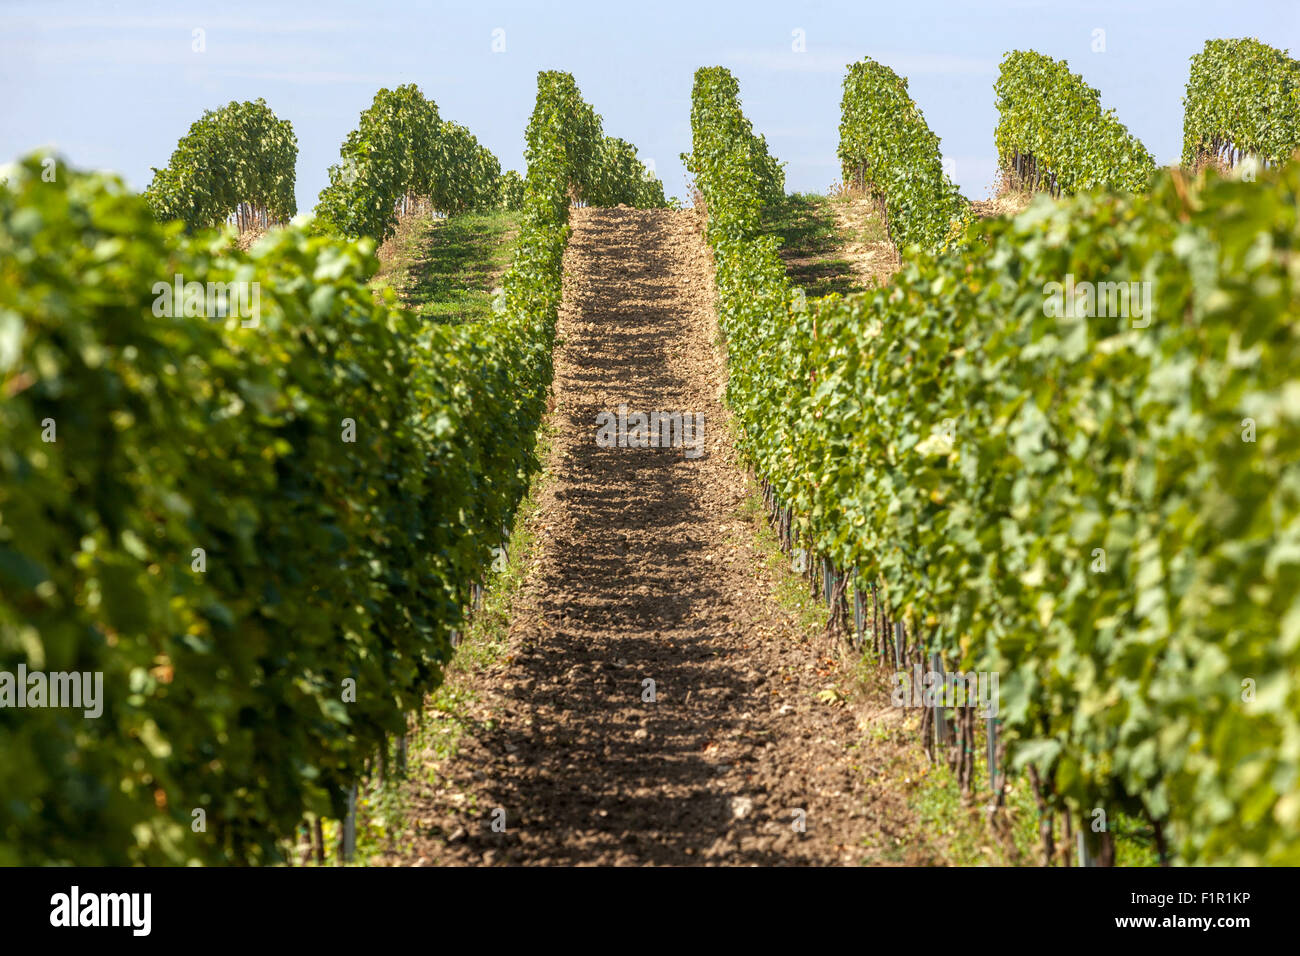 South Moravia fields Vineyards, Region Palava, Czech Republic Stock Photo